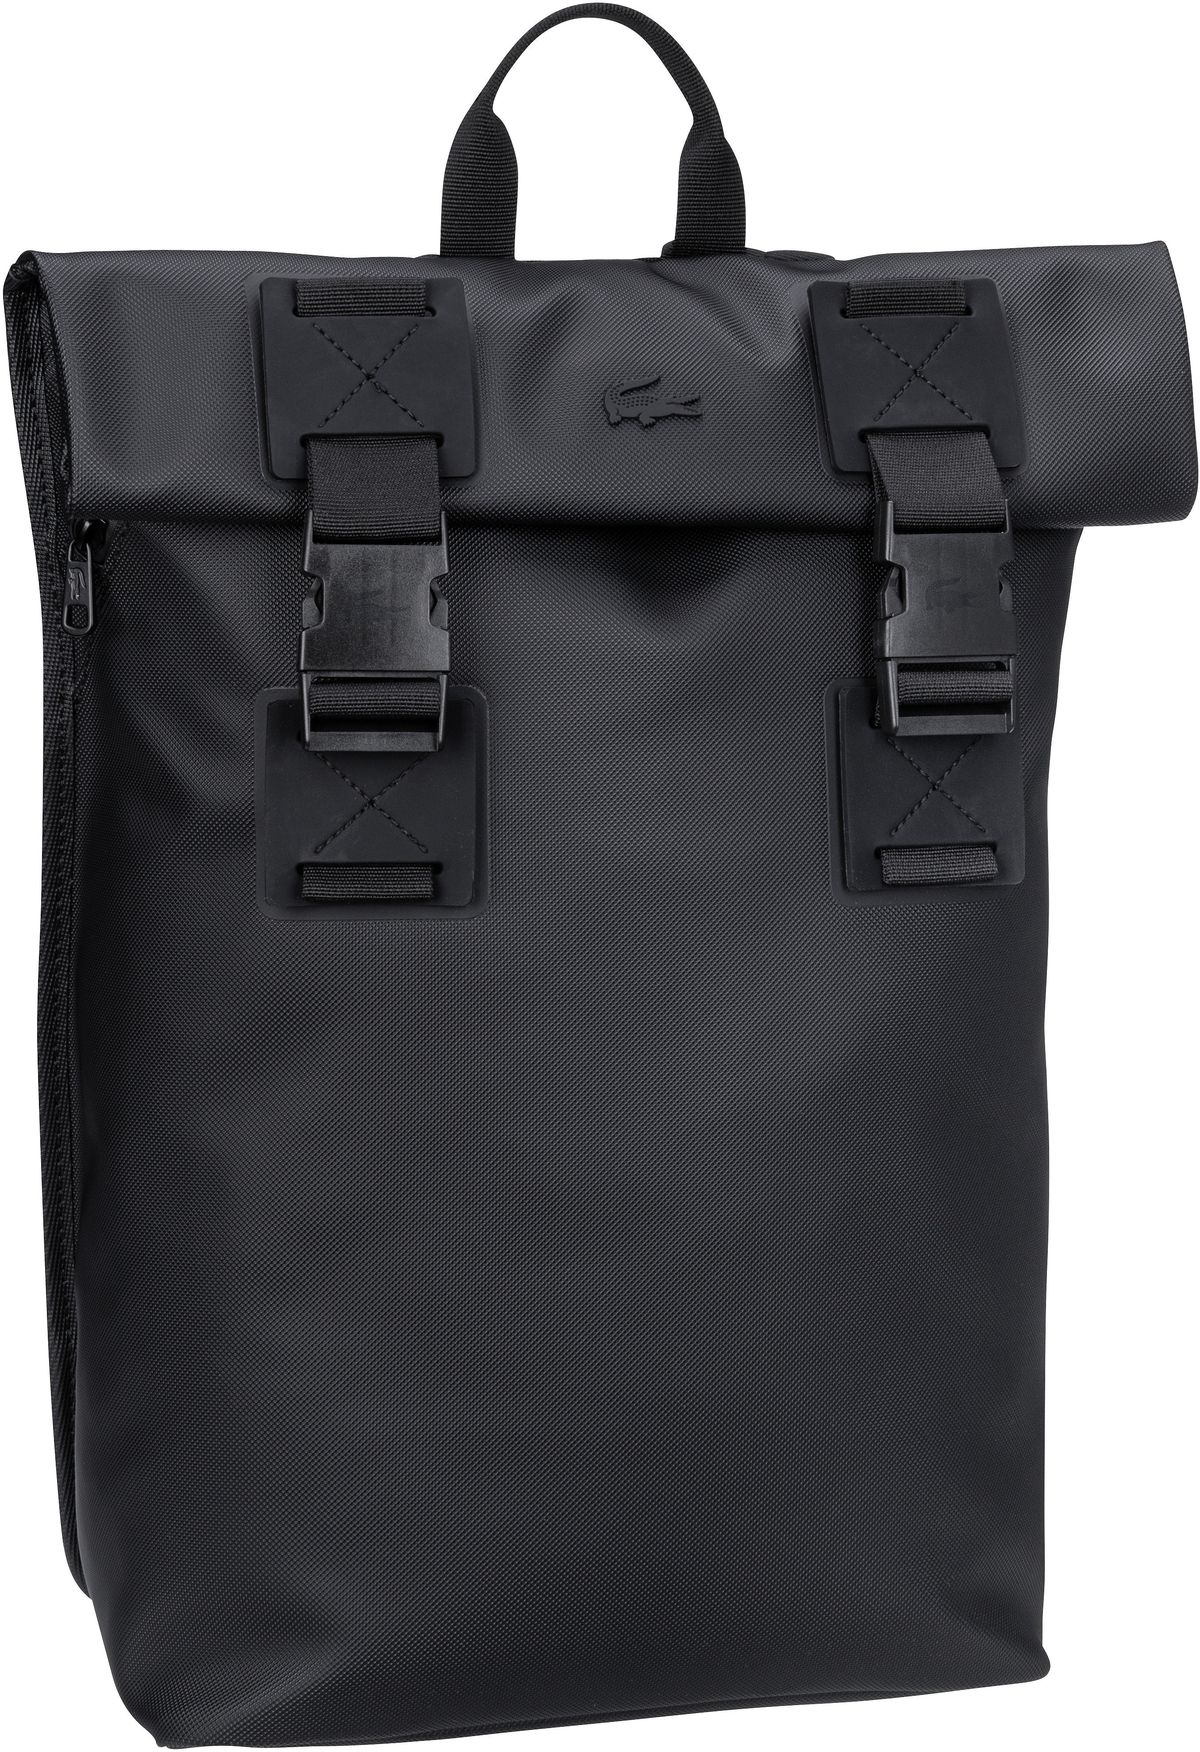 Lacoste Lacoste Naos Backpack 4440 in Schwarz (24.8 Liter), Rucksack / Backpack